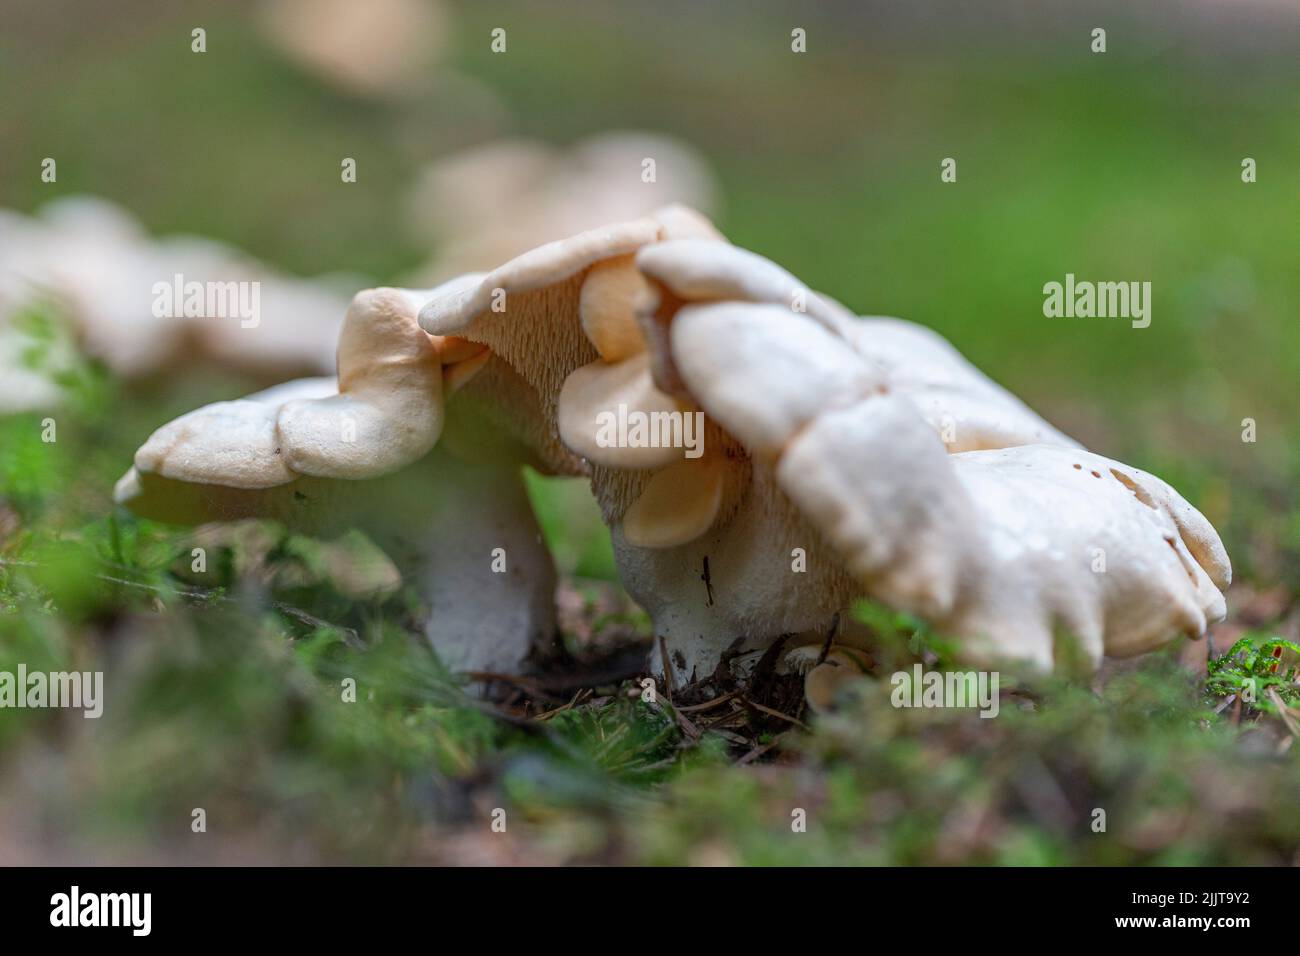 Hydnum repandum (sweet tooth, wood hedgehog, hedgehog mushroom), is a basidiomycete fungus of the family Hydnaceae. Stock Photo